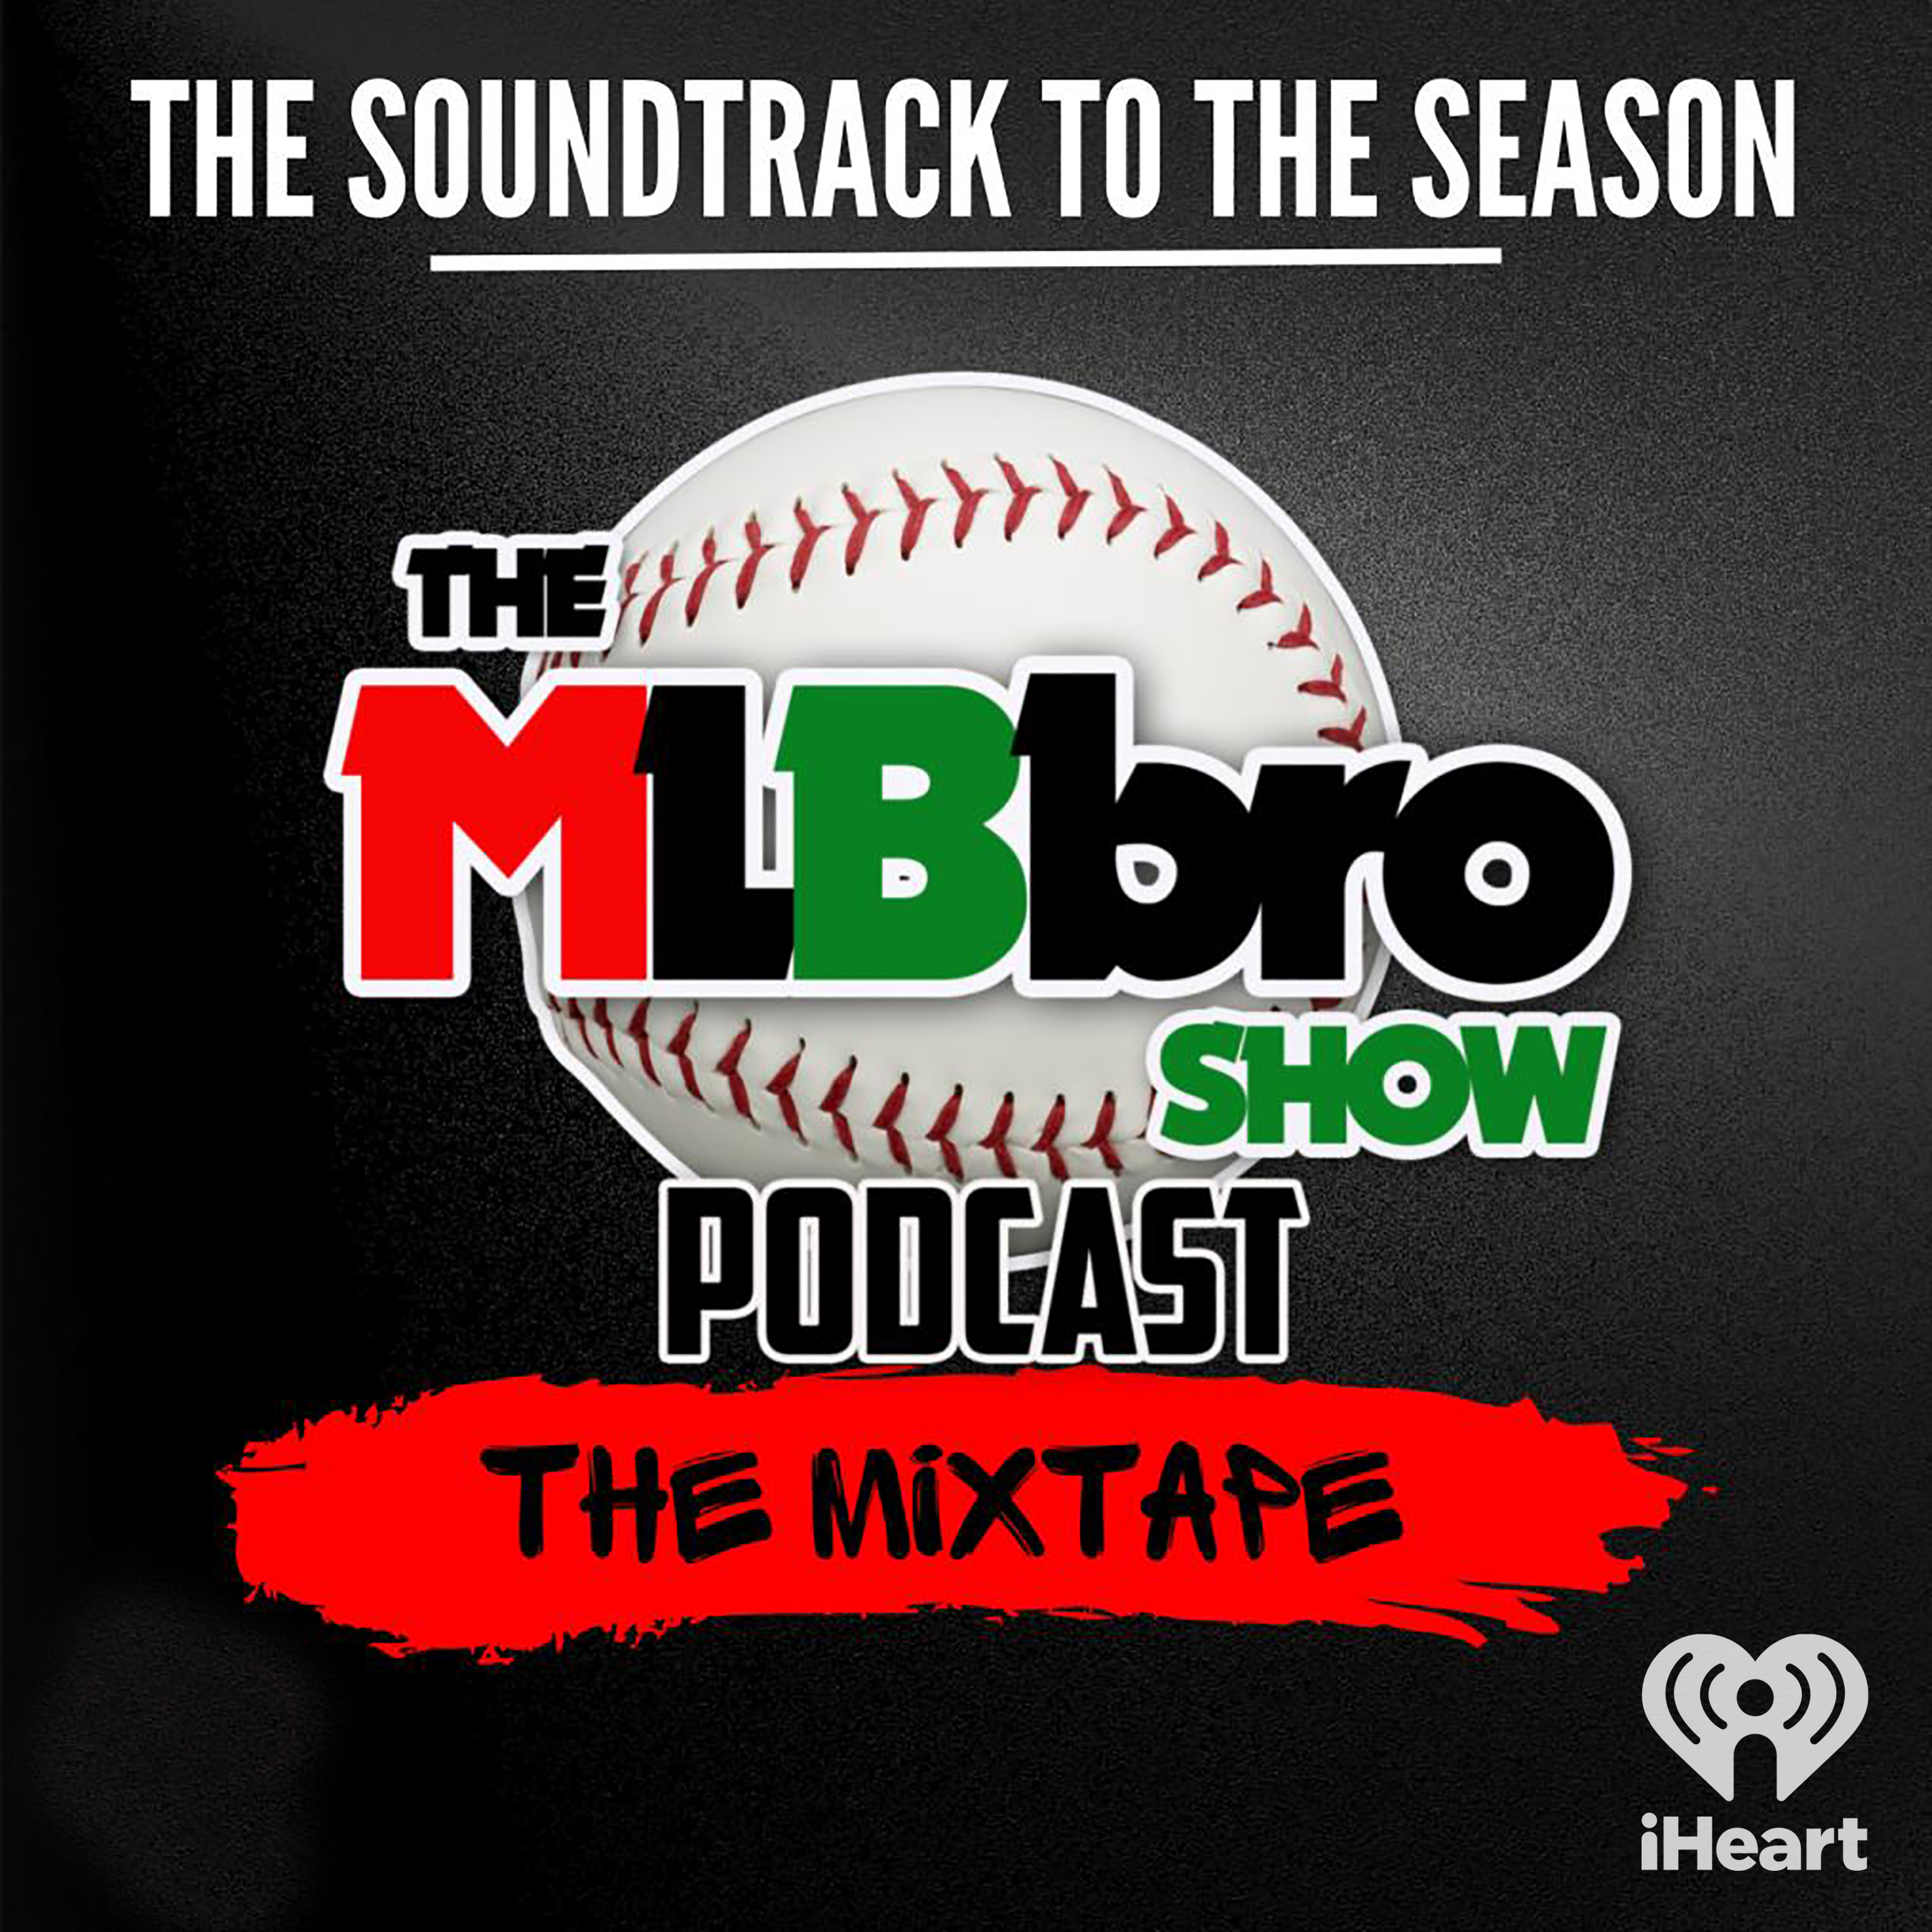 MLBbro Show Podcast The Mixtape Vol 3 Episode 13